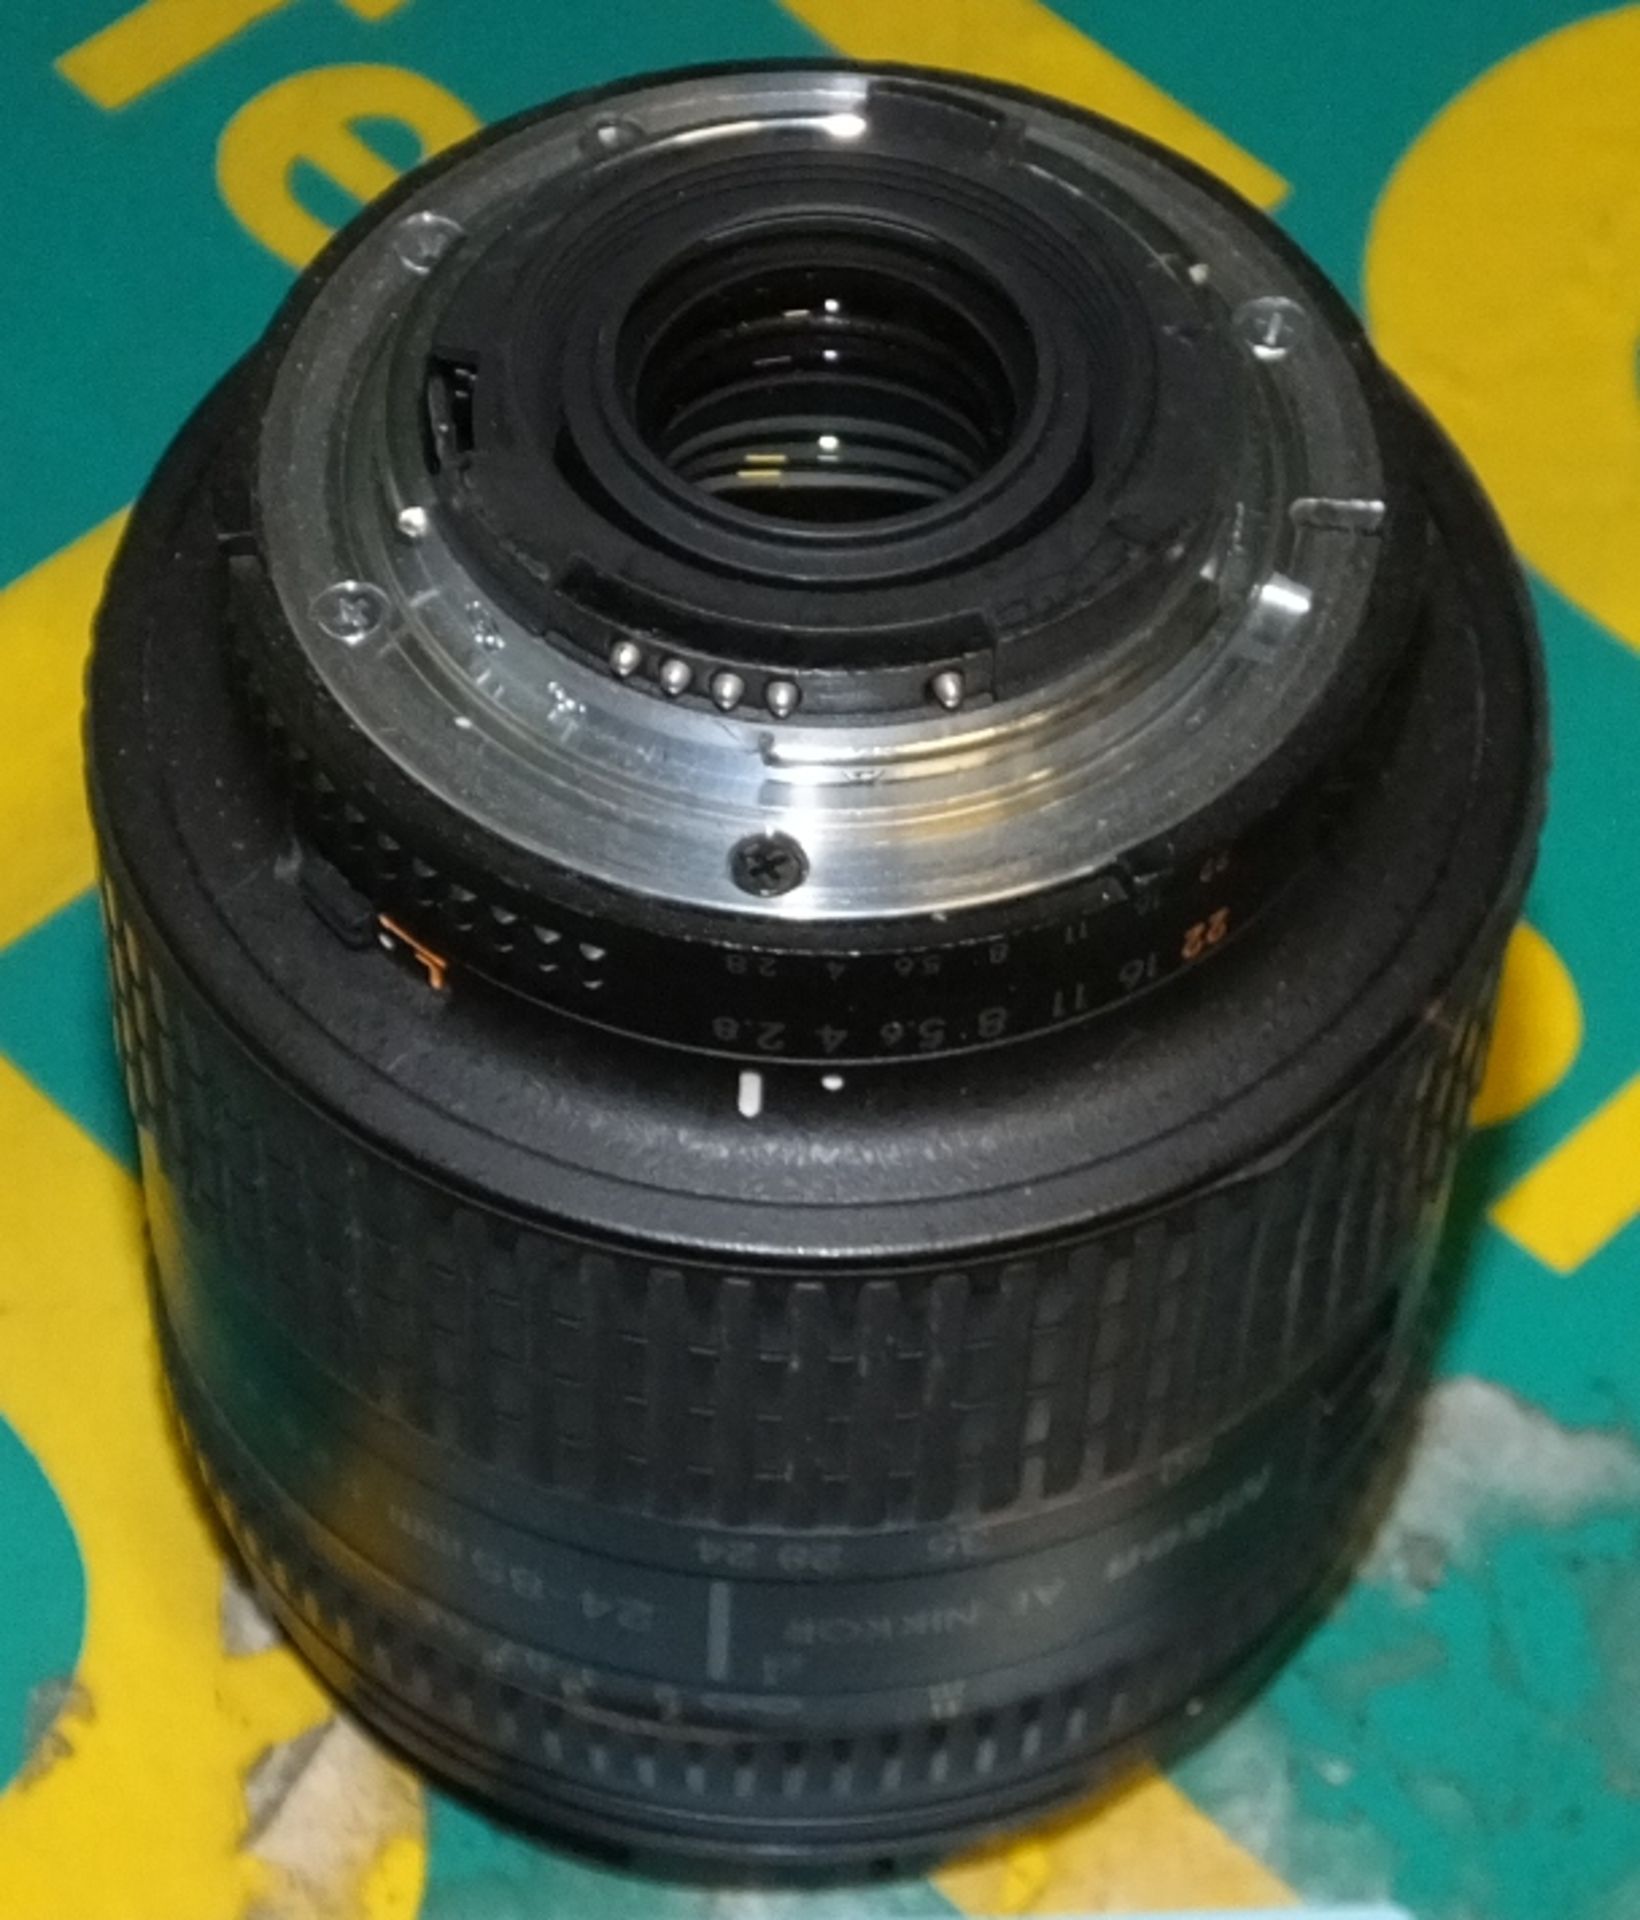 Nikon IF aspherical MACRO (1.2) Lens - Image 4 of 4